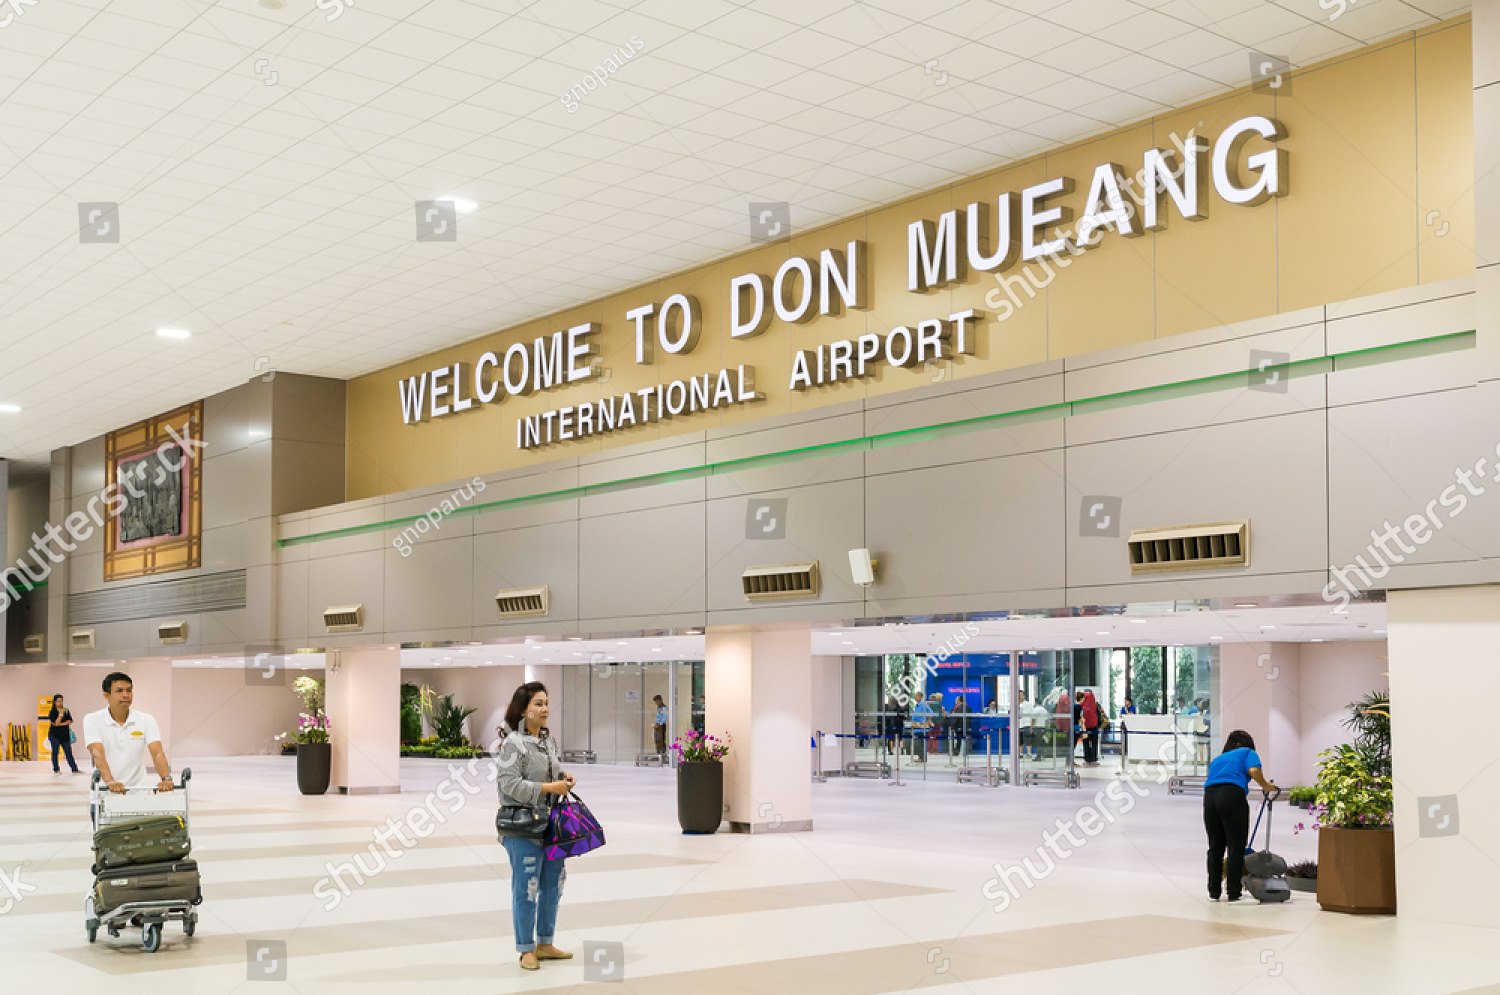 Don Muang International Airport (DMK)